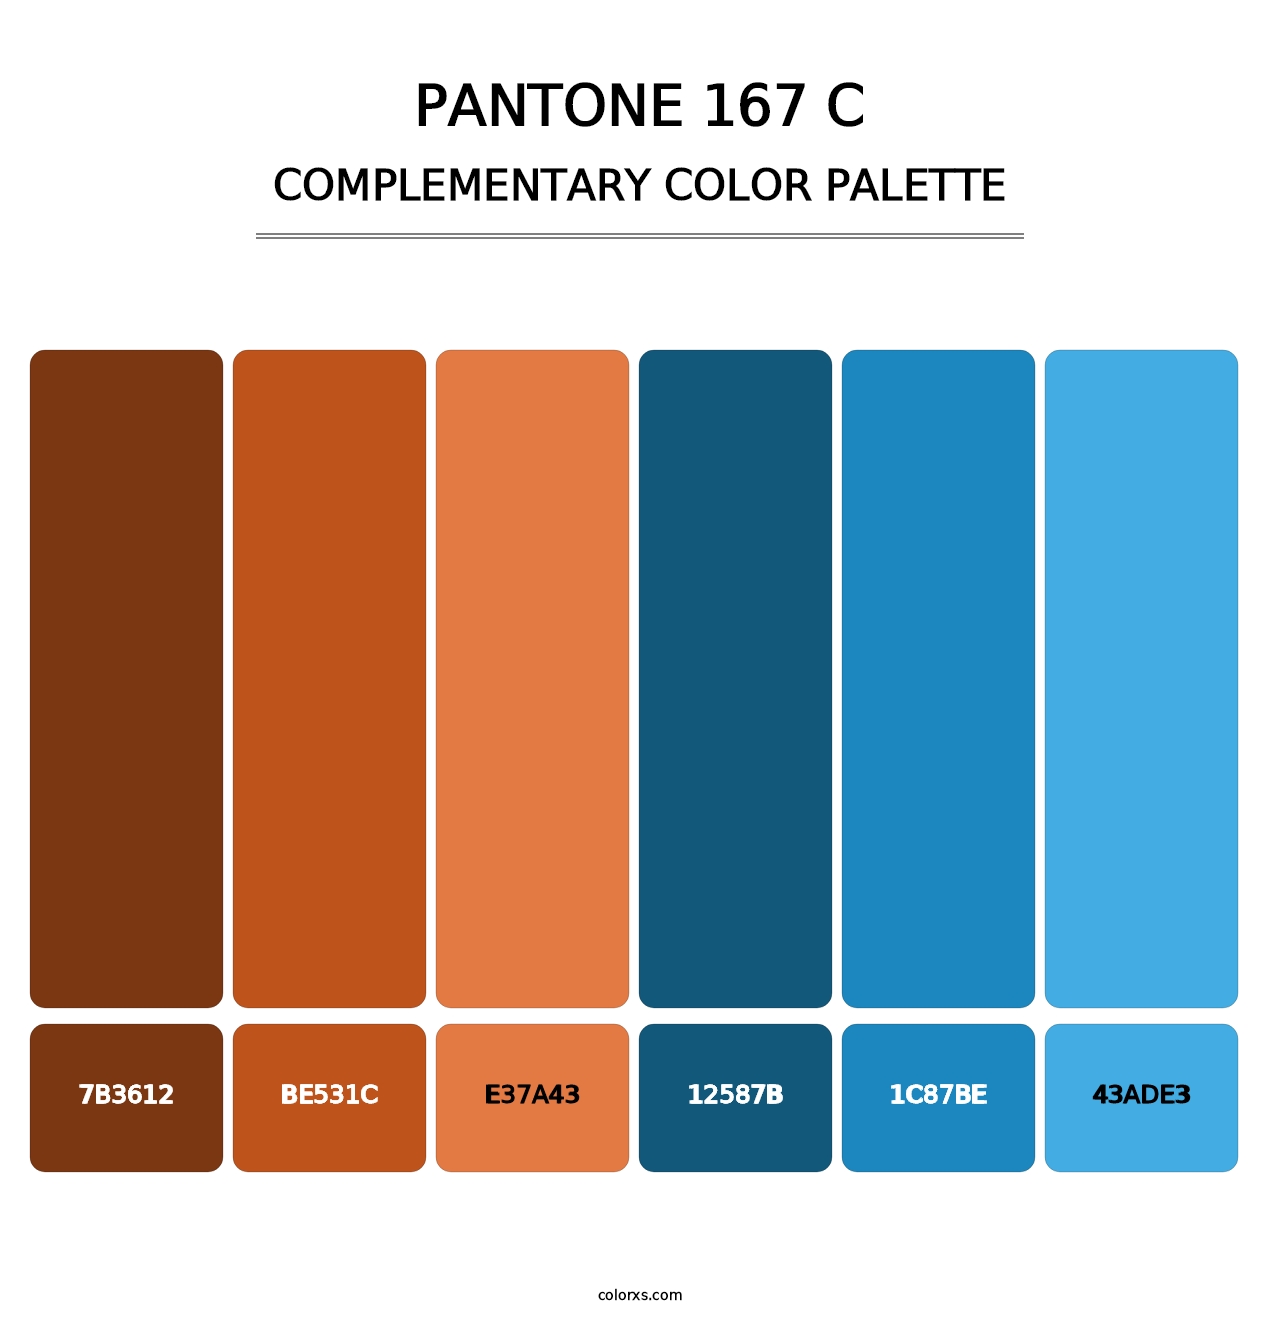 PANTONE 167 C - Complementary Color Palette